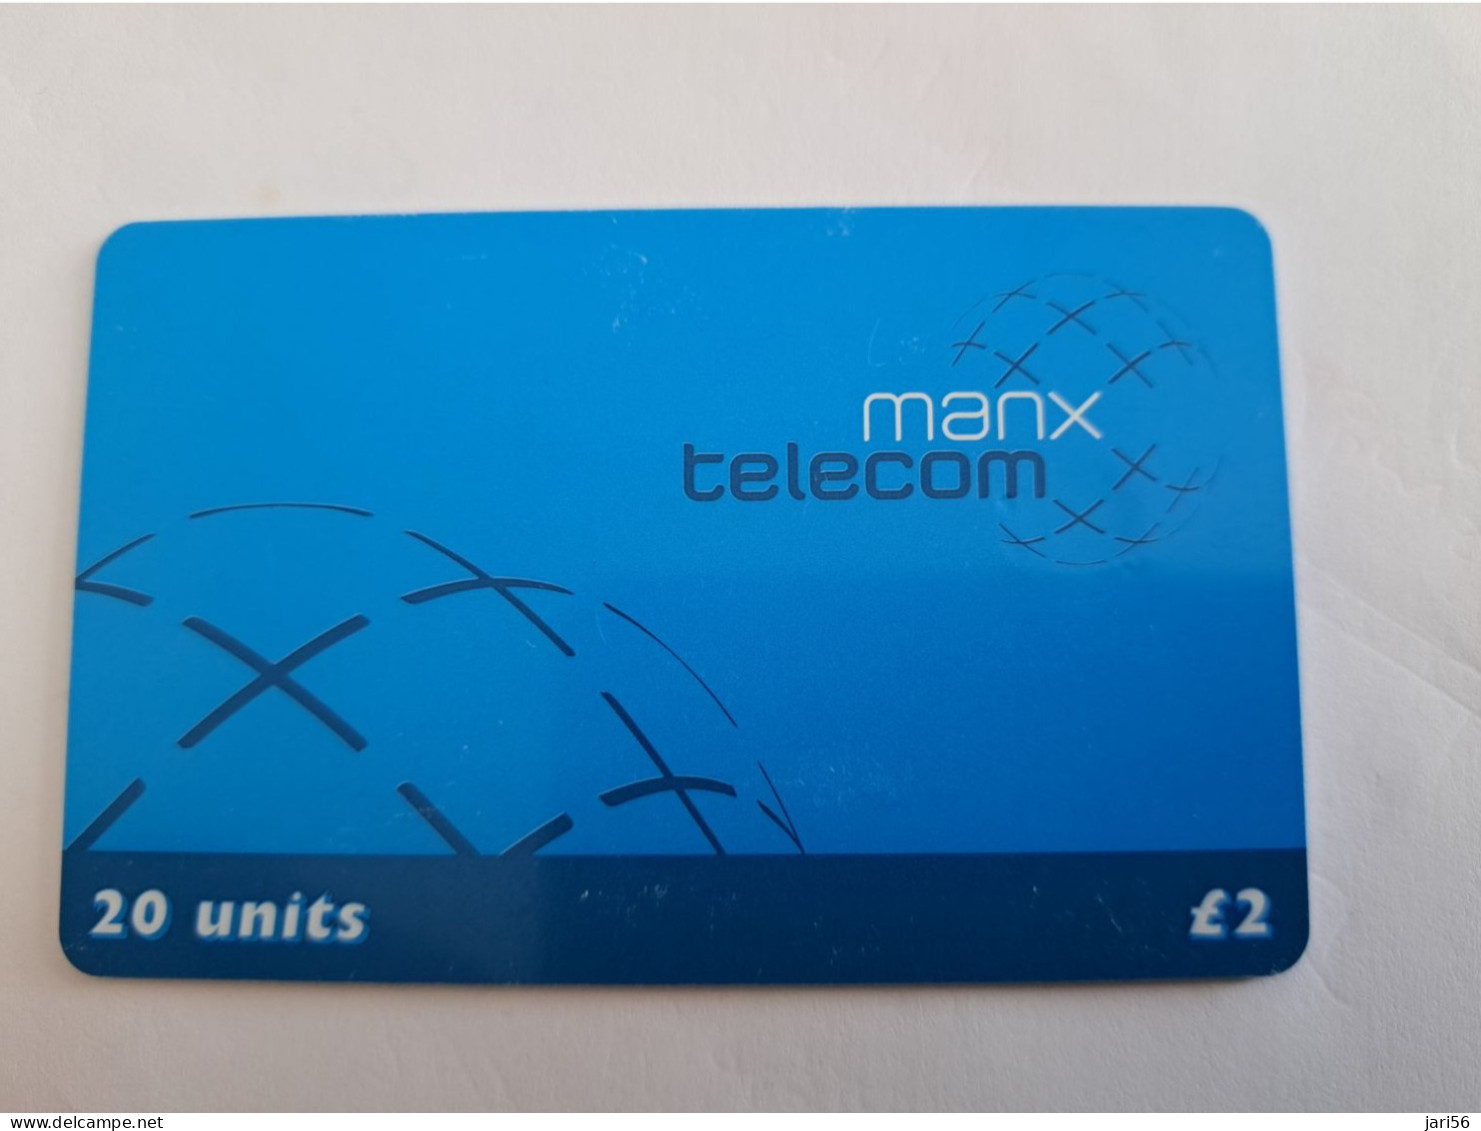 ISLE OF MAN 2 POUND  MANX TELECOM  21 UNITS / MANX TELECOM/ BLUE CARD            CHIP   ** 15104** - Isla De Man